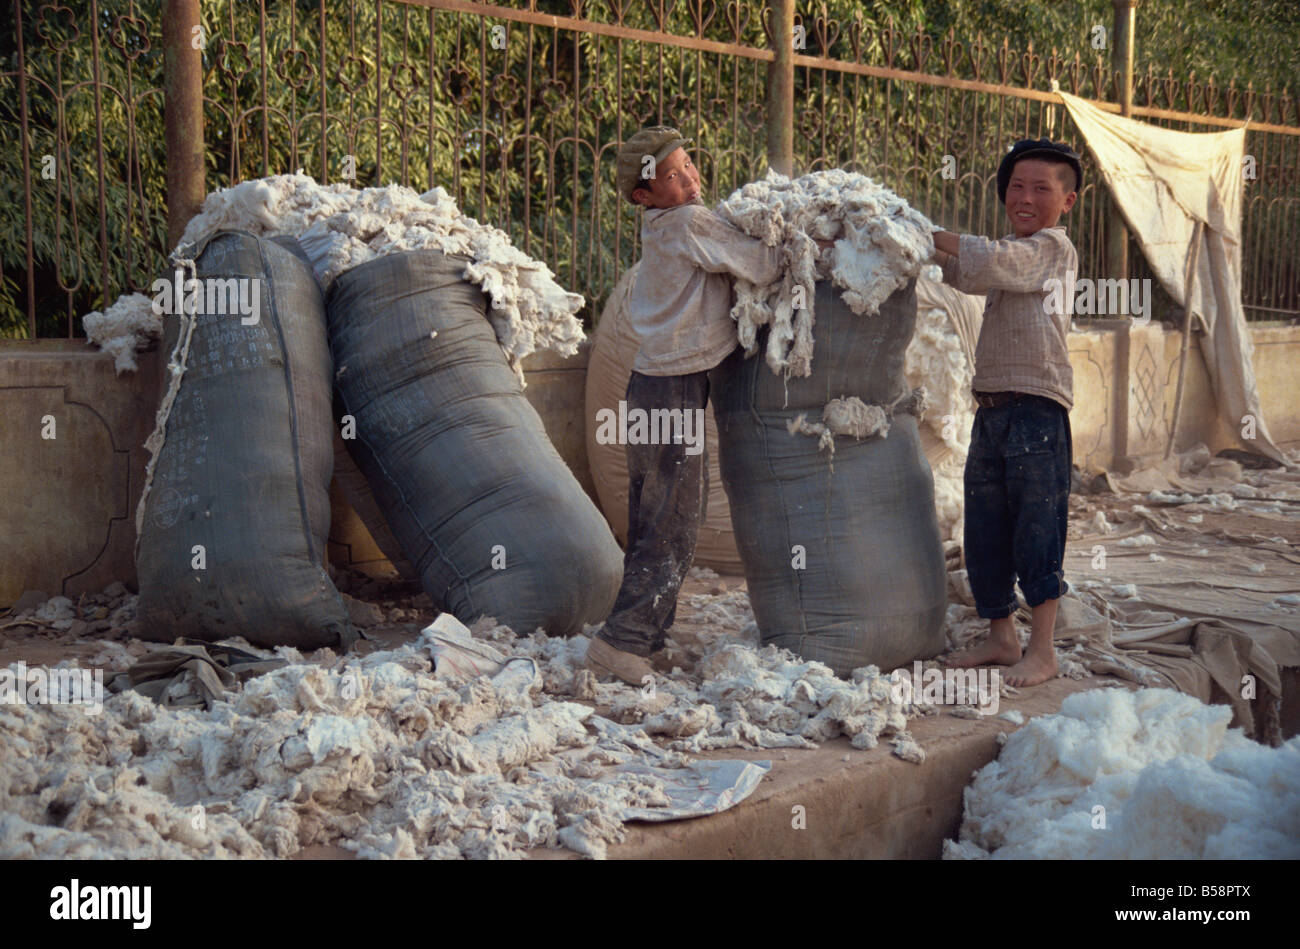 Kinder packen Wolle am Ende des Tages Sonntag Markt Kashgar China Asien Stockfoto